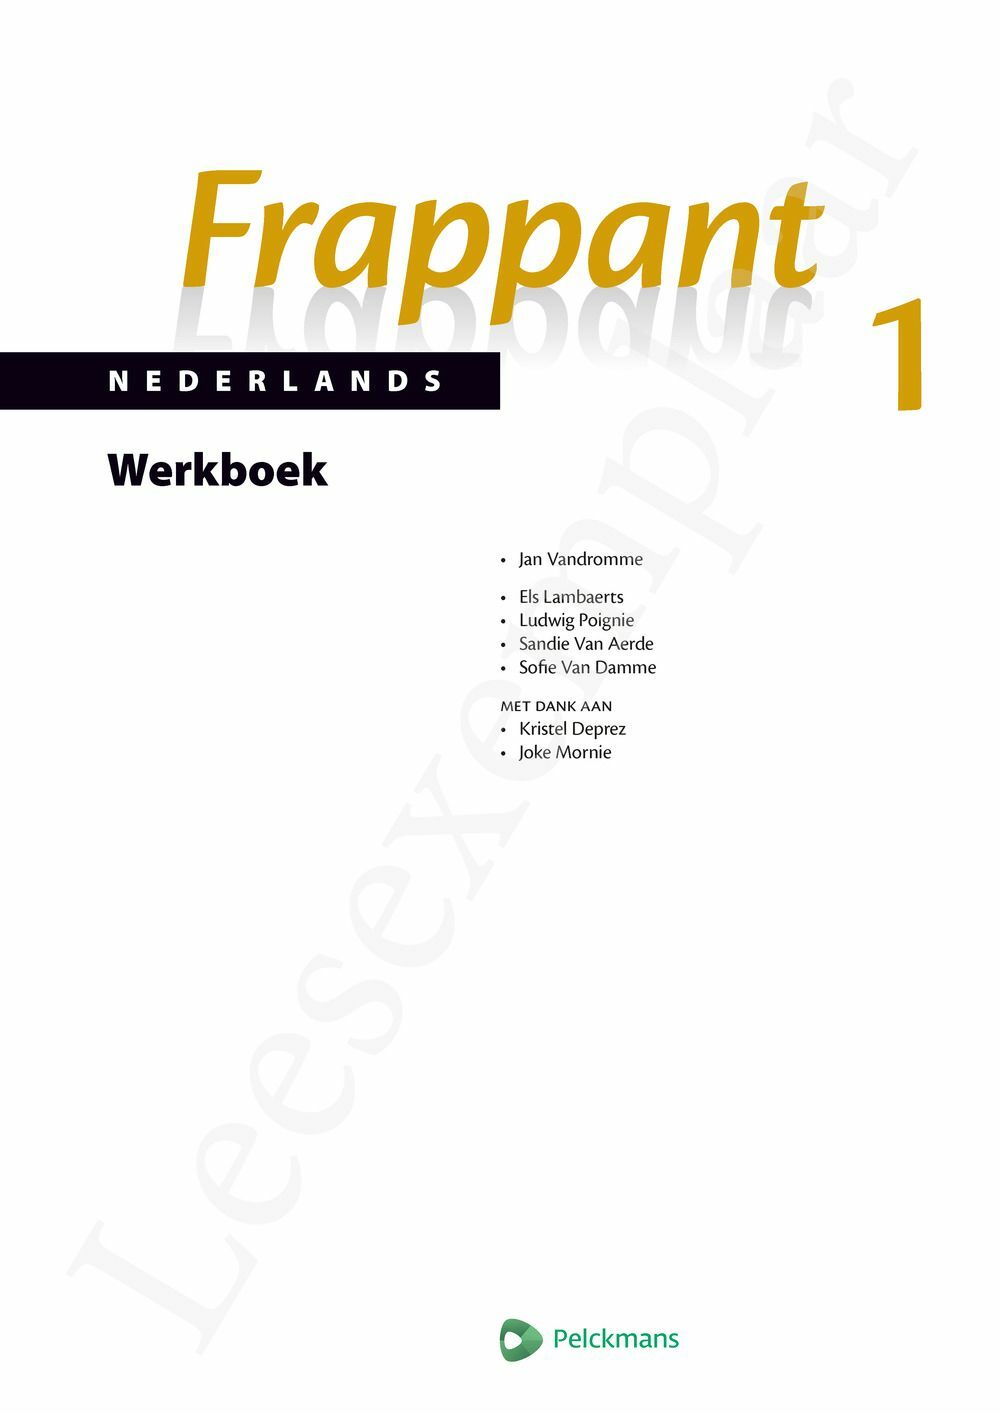 Preview: Frappant Nederlands 1 Werkboek (incl. Pelckmans Portaal)